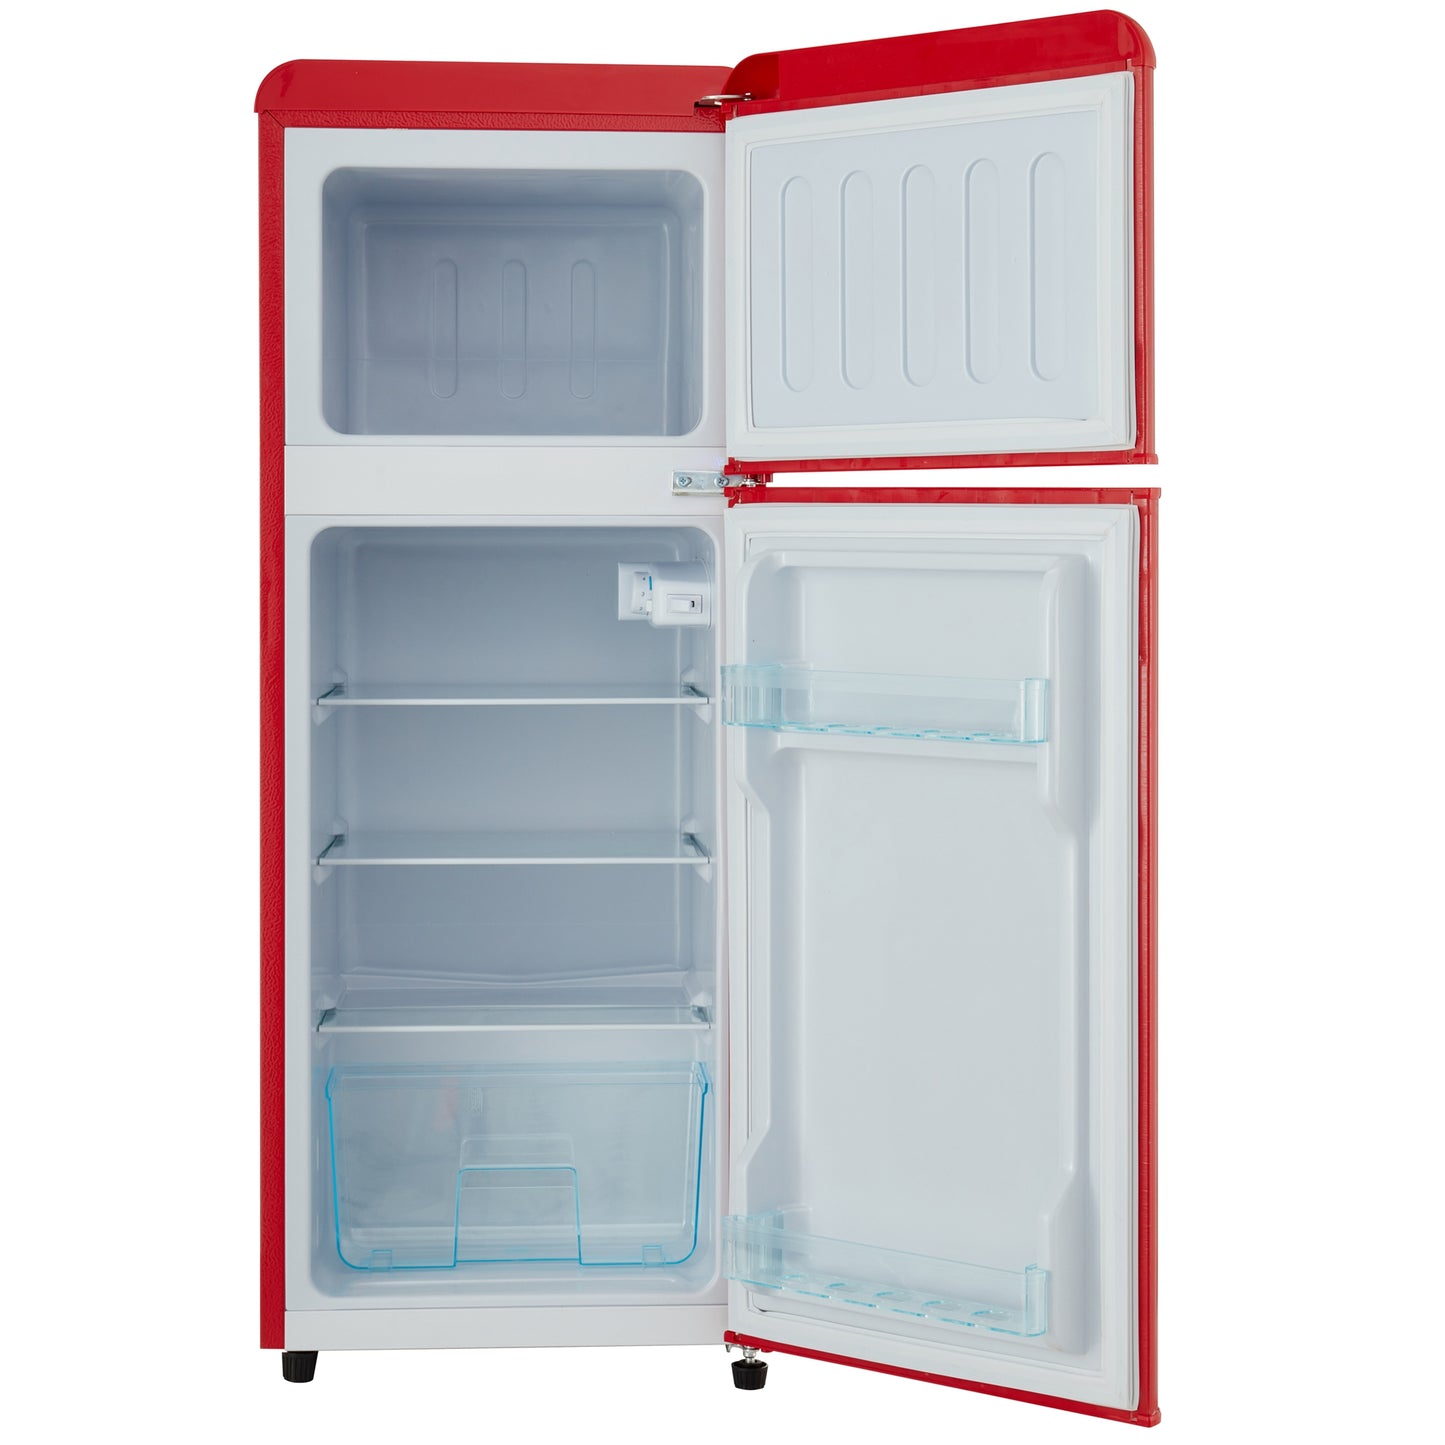 4.5 cu. ft. Dual Zone Refrigerator, 3.3 Fridge + 1.2 cu. ft. 4-Star Freezer, Red， 16.69" x 17.52" x 40.08"